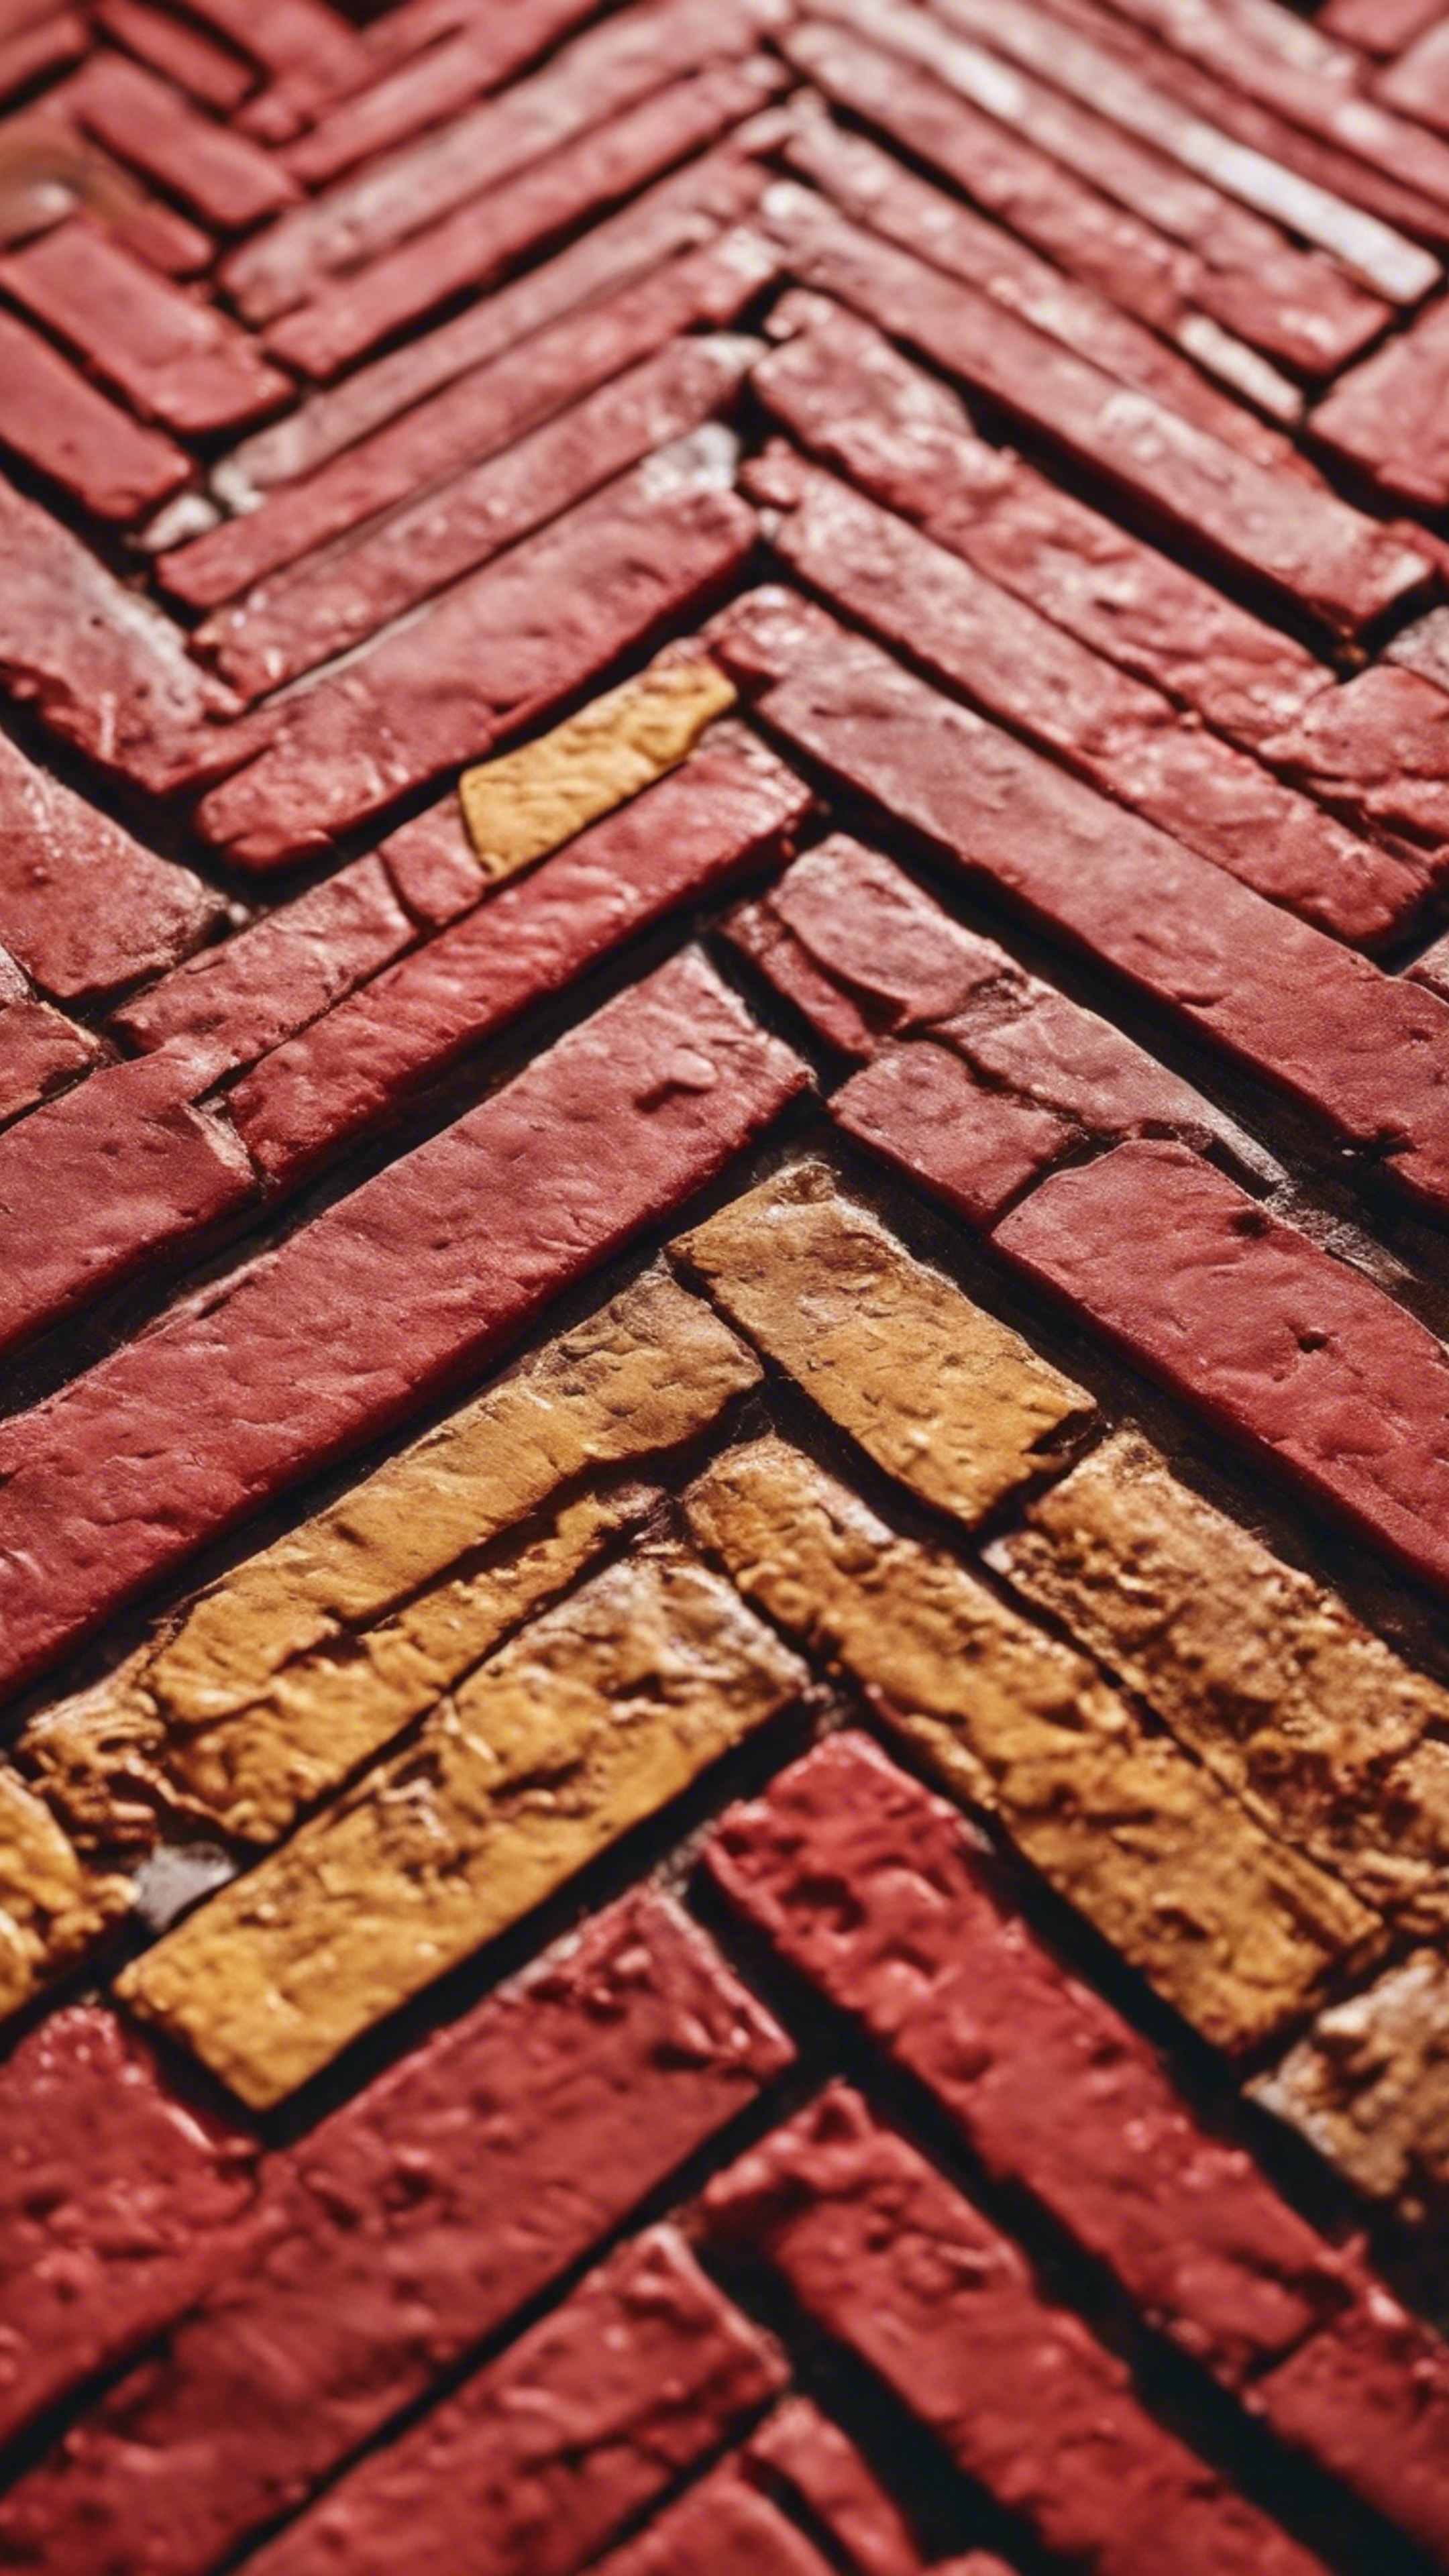 A pathway comprising a herringbone pattern using bricks in shades of red and yellow. Divar kağızı[fb3238611eed4691b5b0]